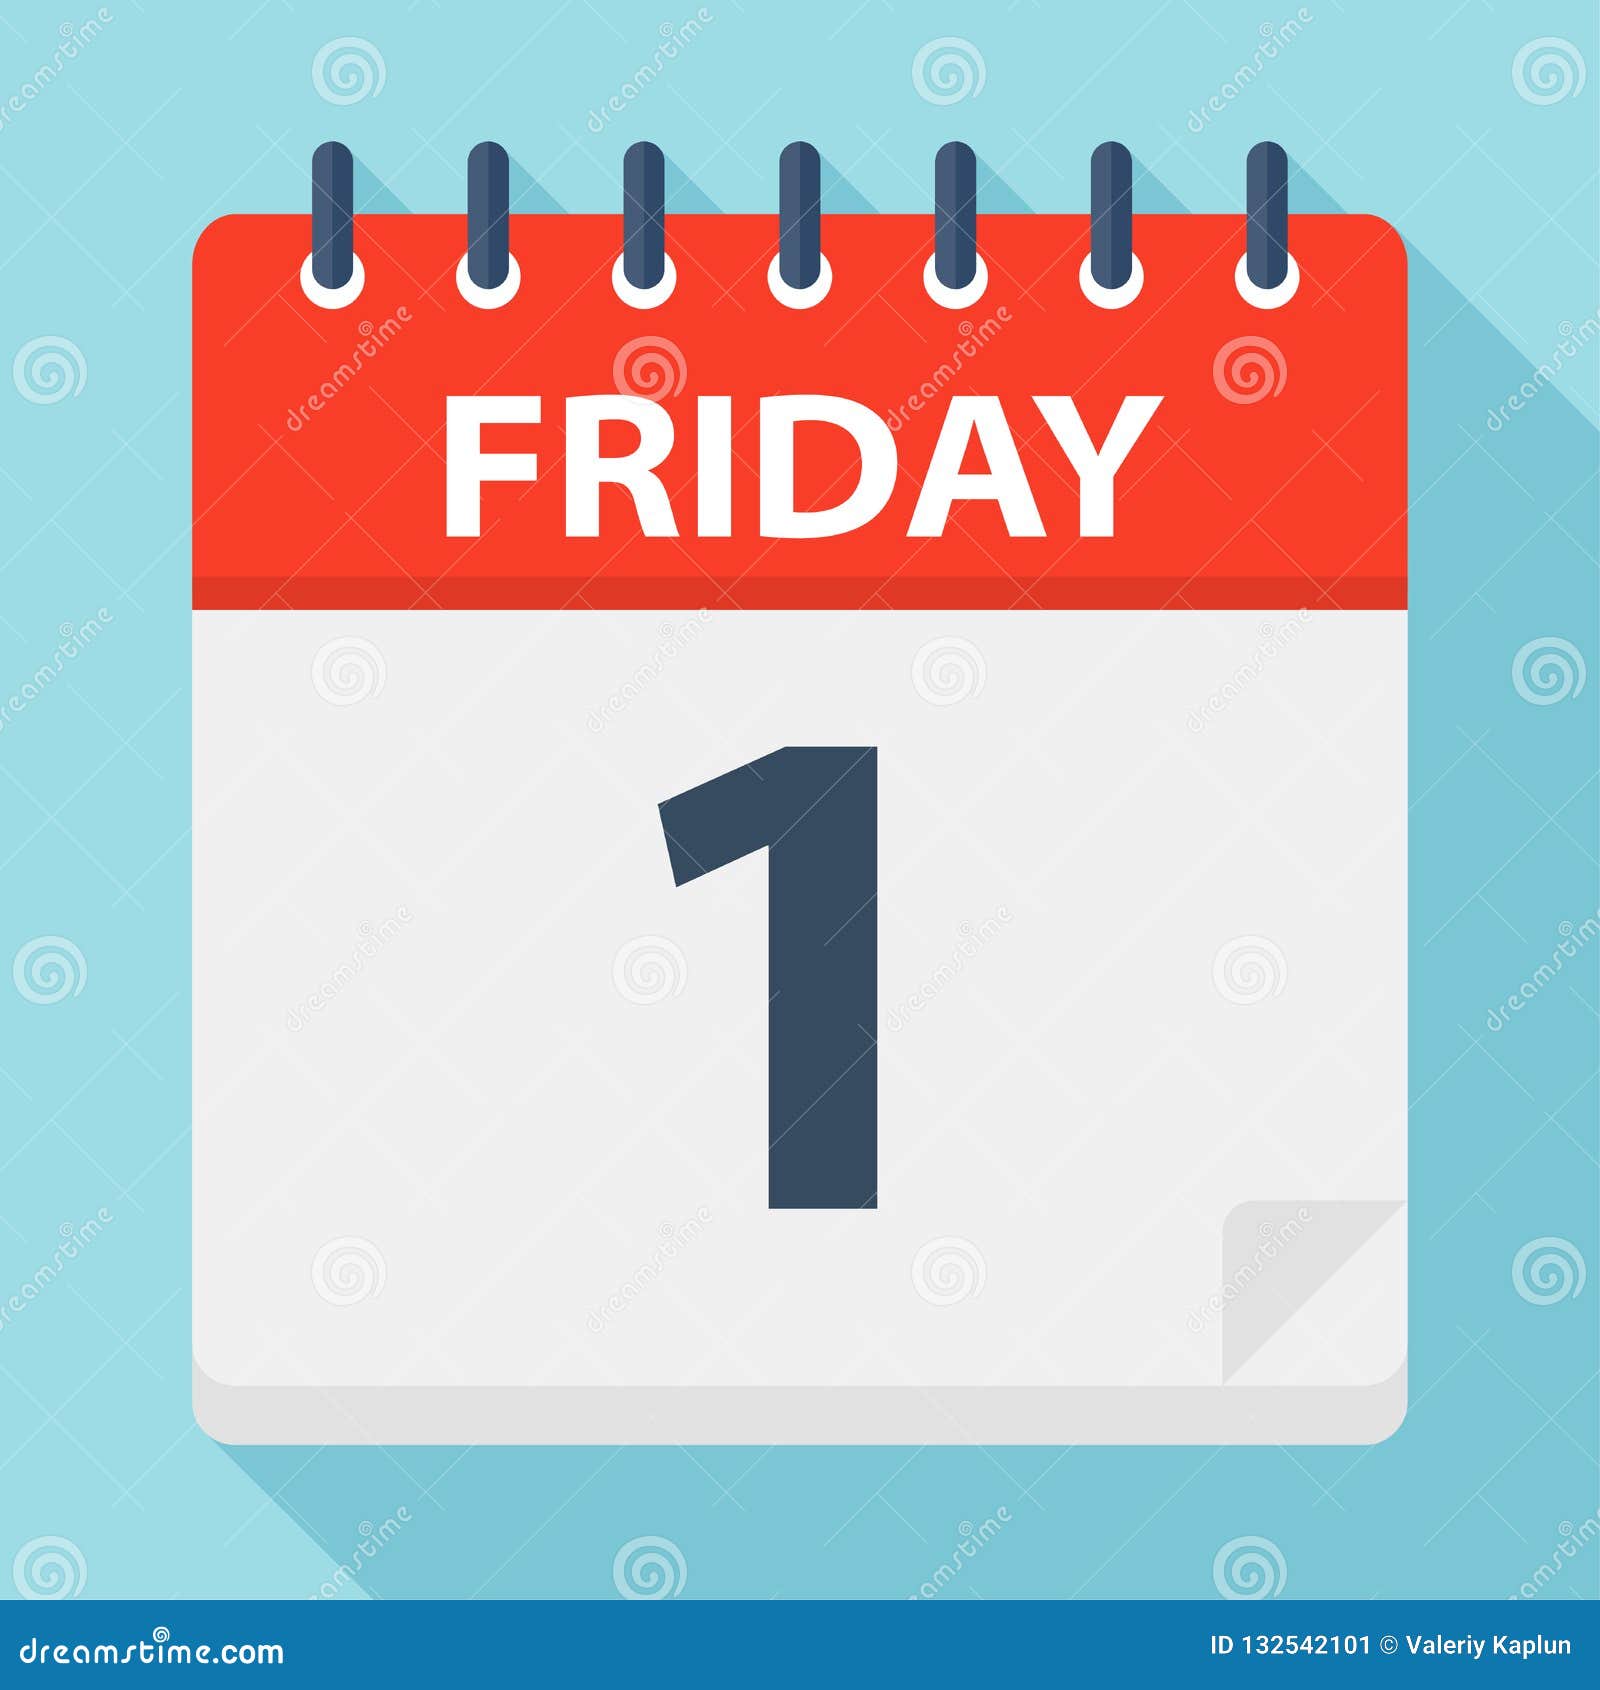 Friday 1 Calendar Icon. Vector Illustration of Week Day Paper Leaf